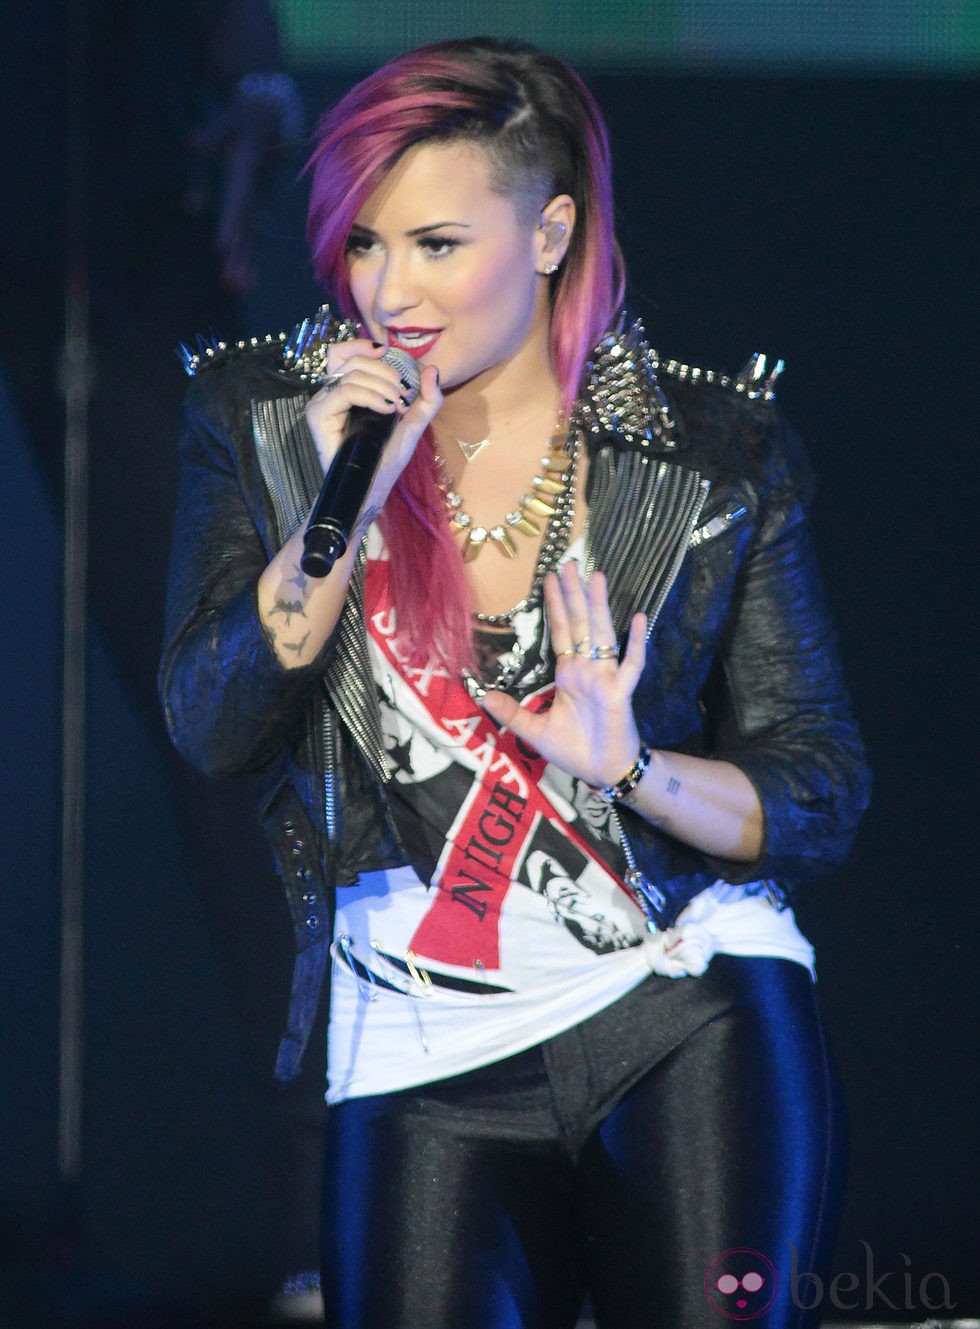 Demi Lovato estrena nuevo look durante un concierto de su gira 'Neon Lights Tour'